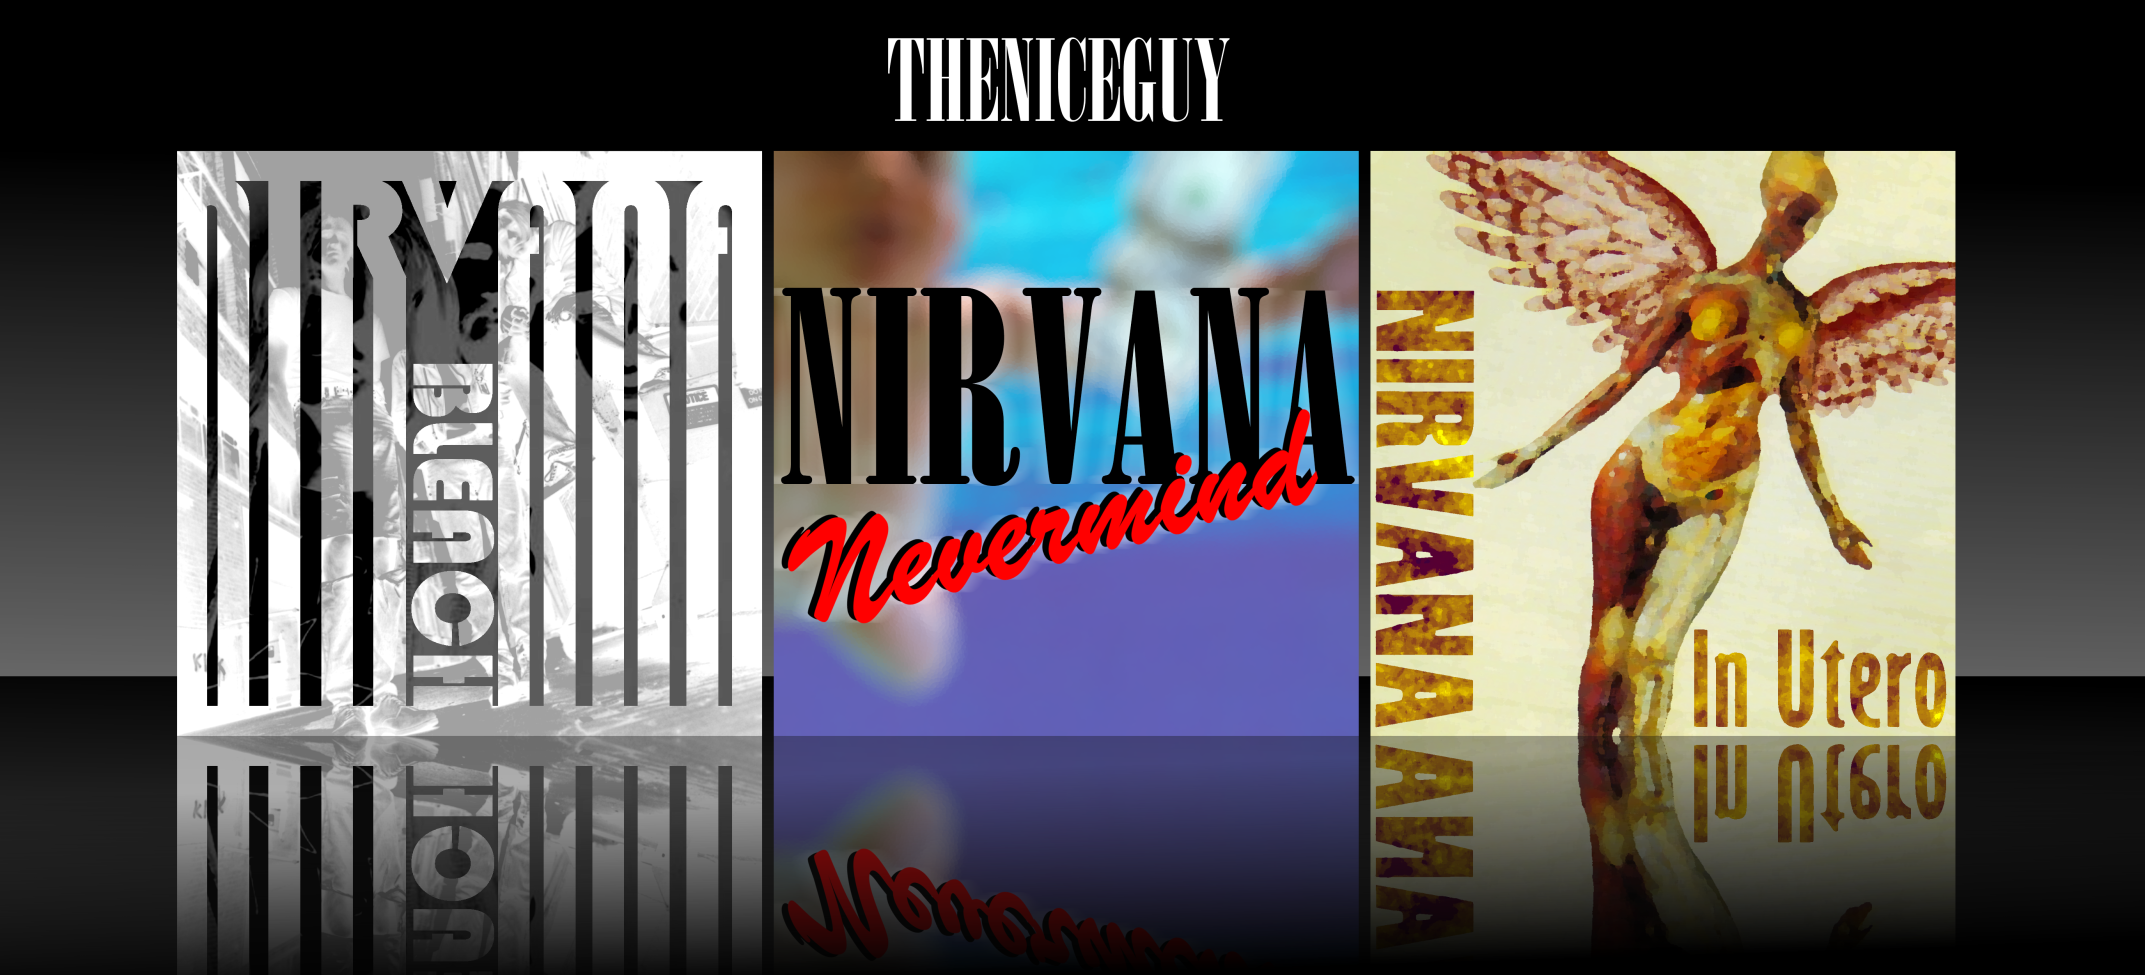 Nirvana Collection box cover